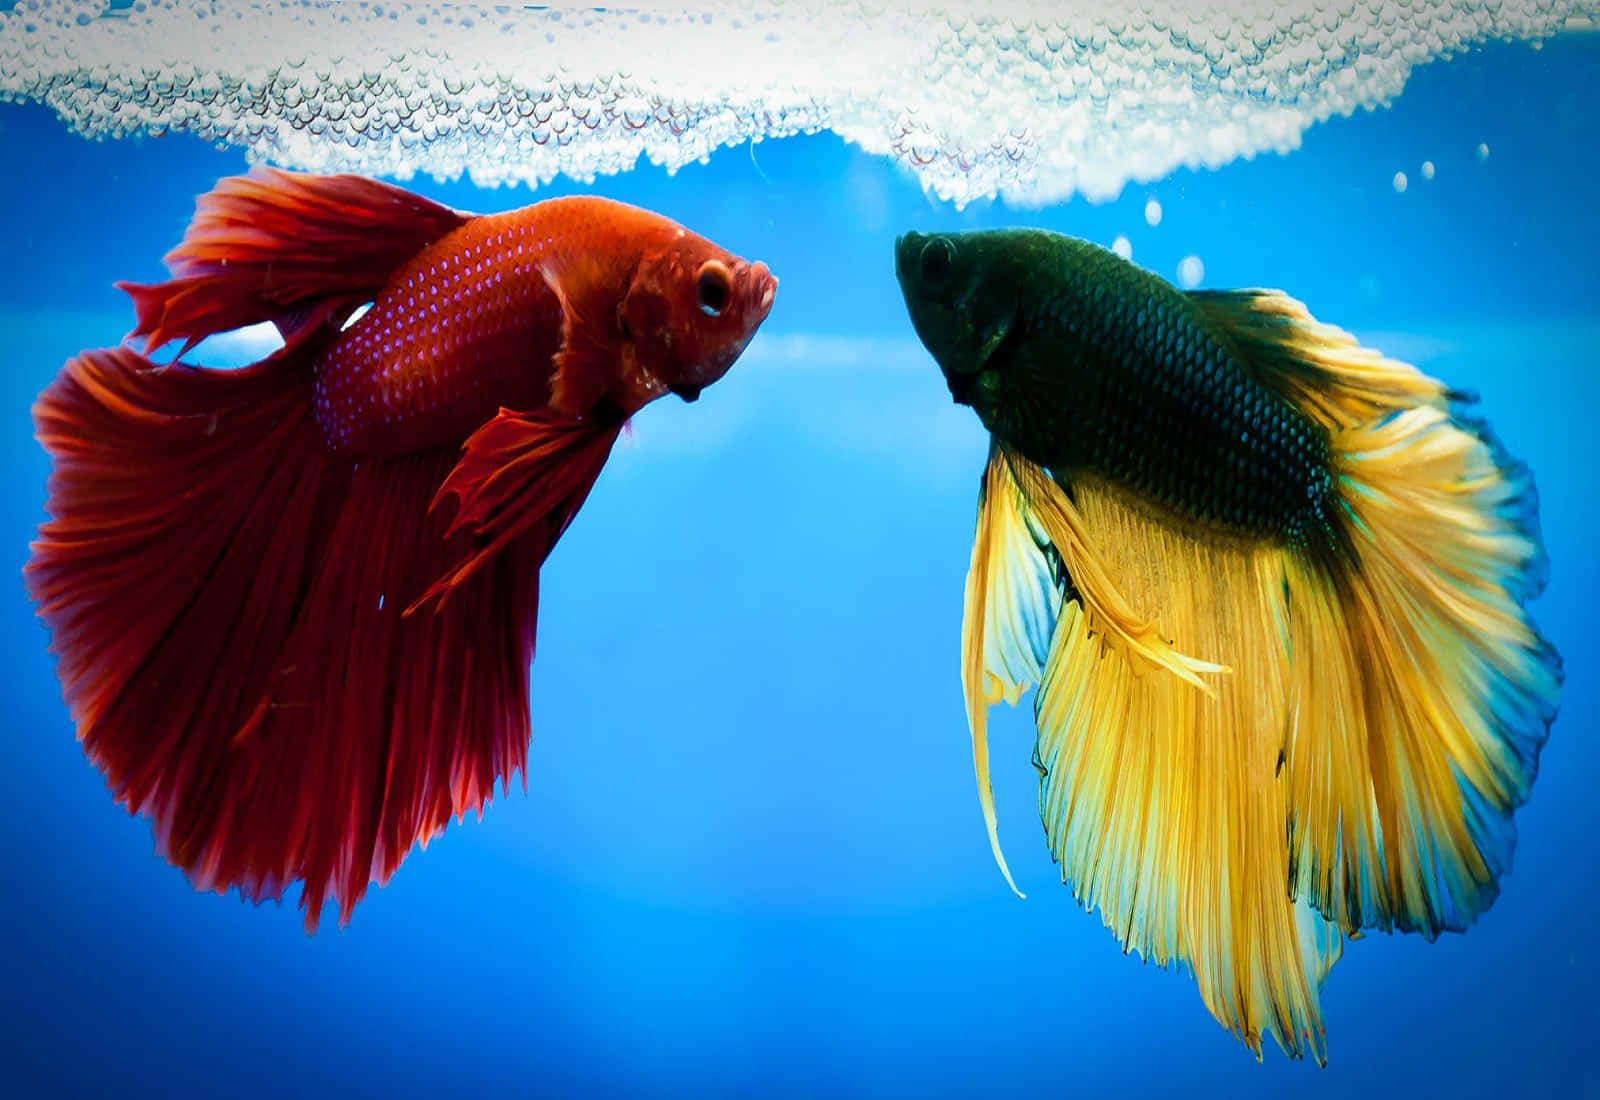 Vibrant Betta Fish Duo.jpg Wallpaper